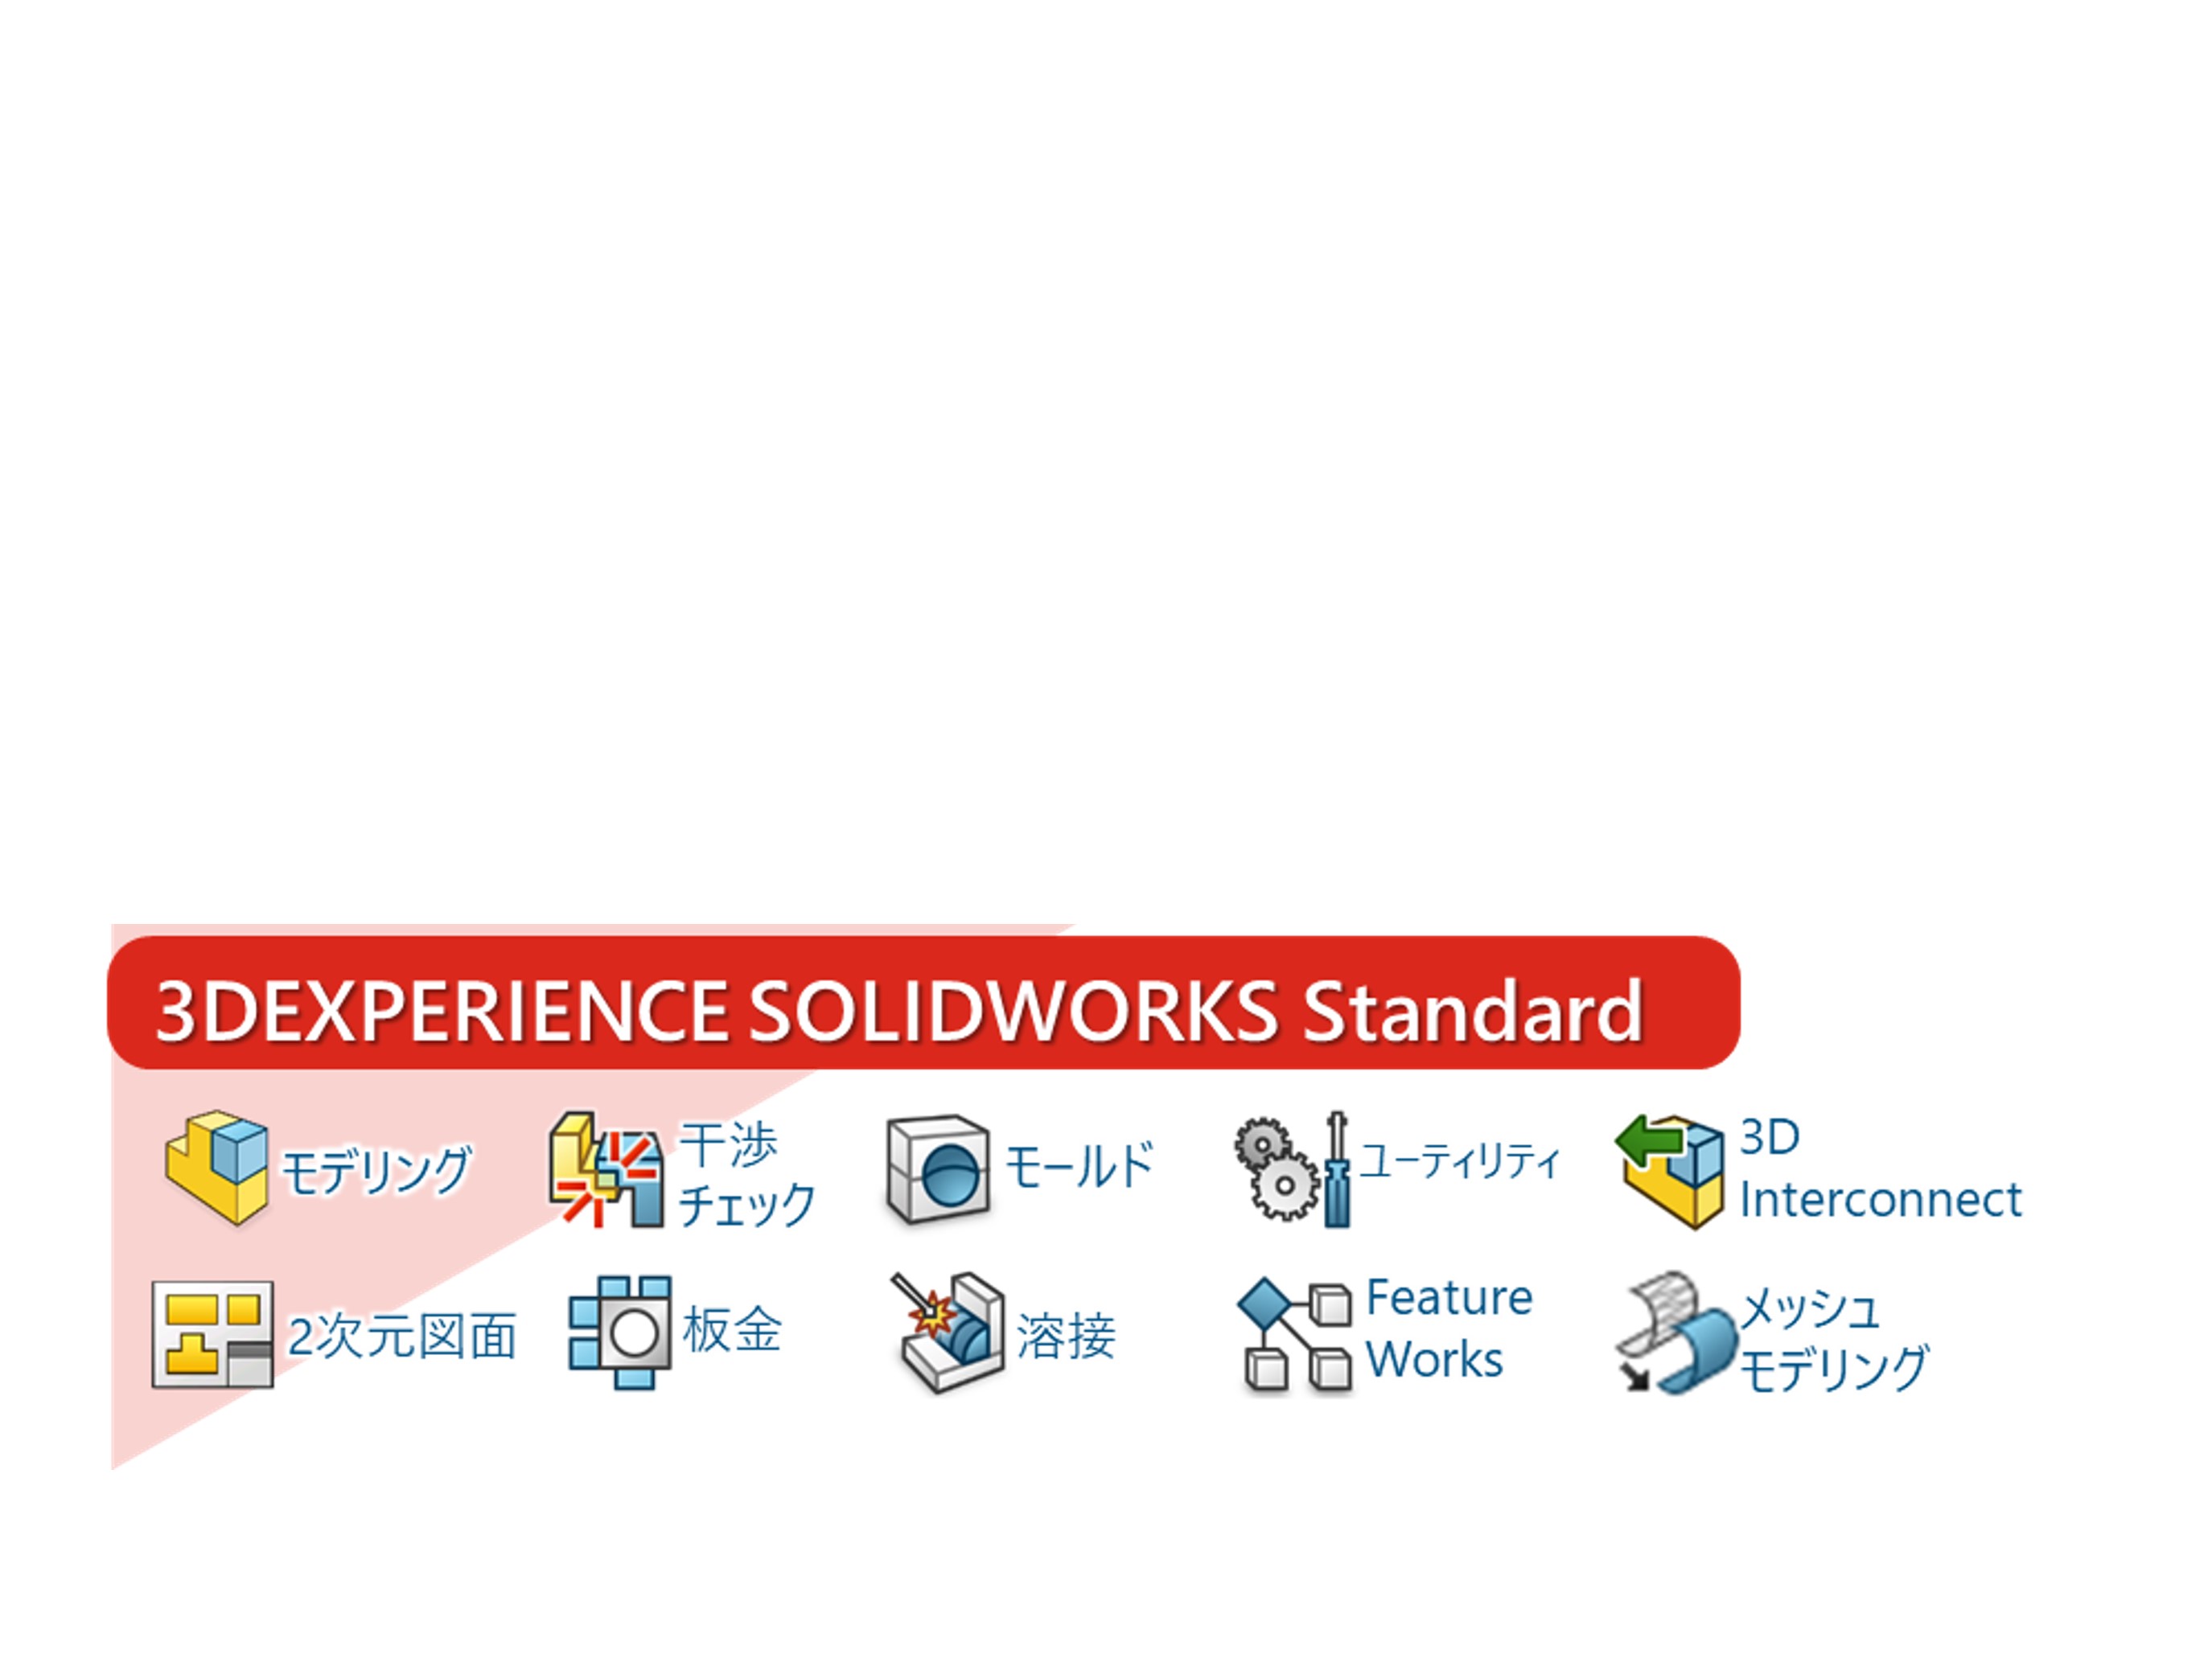 3DEXPERIENCE SOLIDWORKS Standard